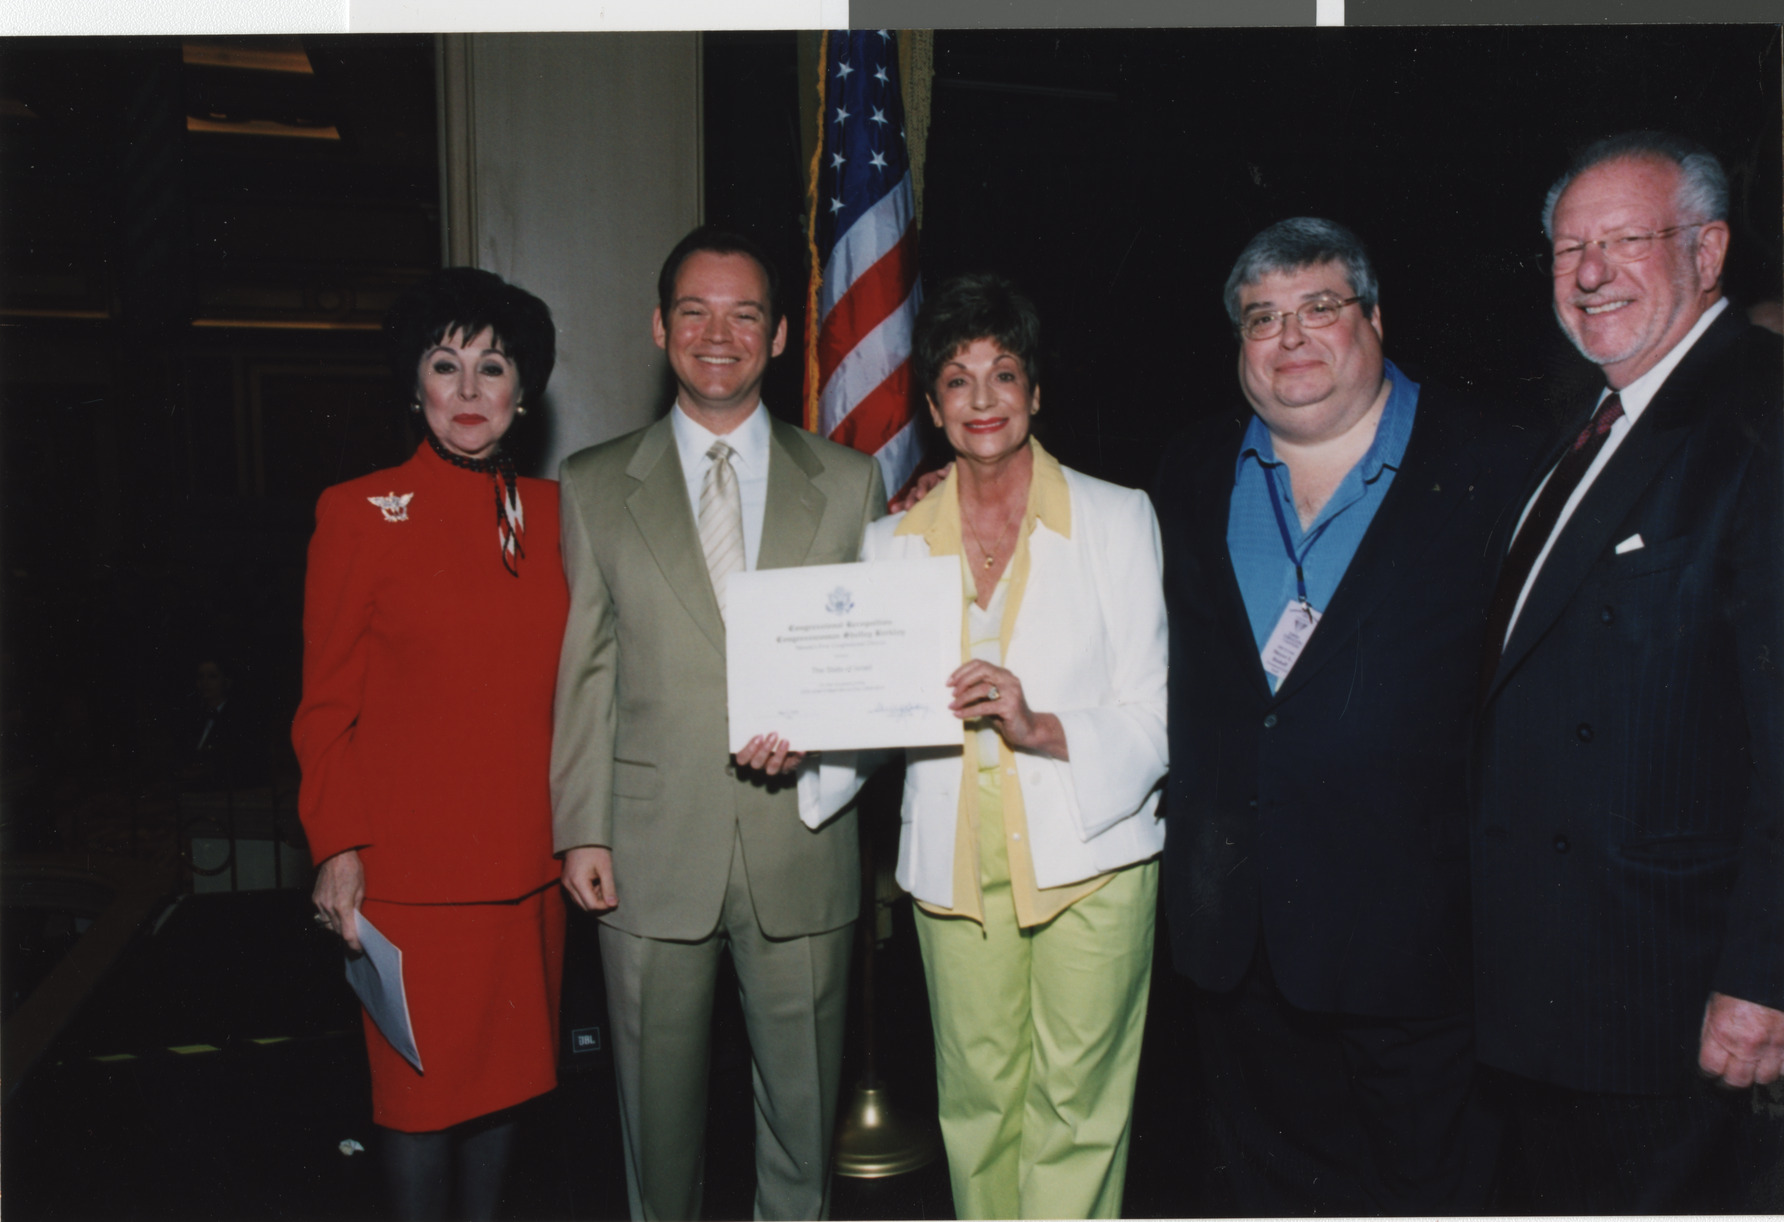 Photograph of Shelley Berkley, Oscar Goodman, Michael Novick and others, 2004